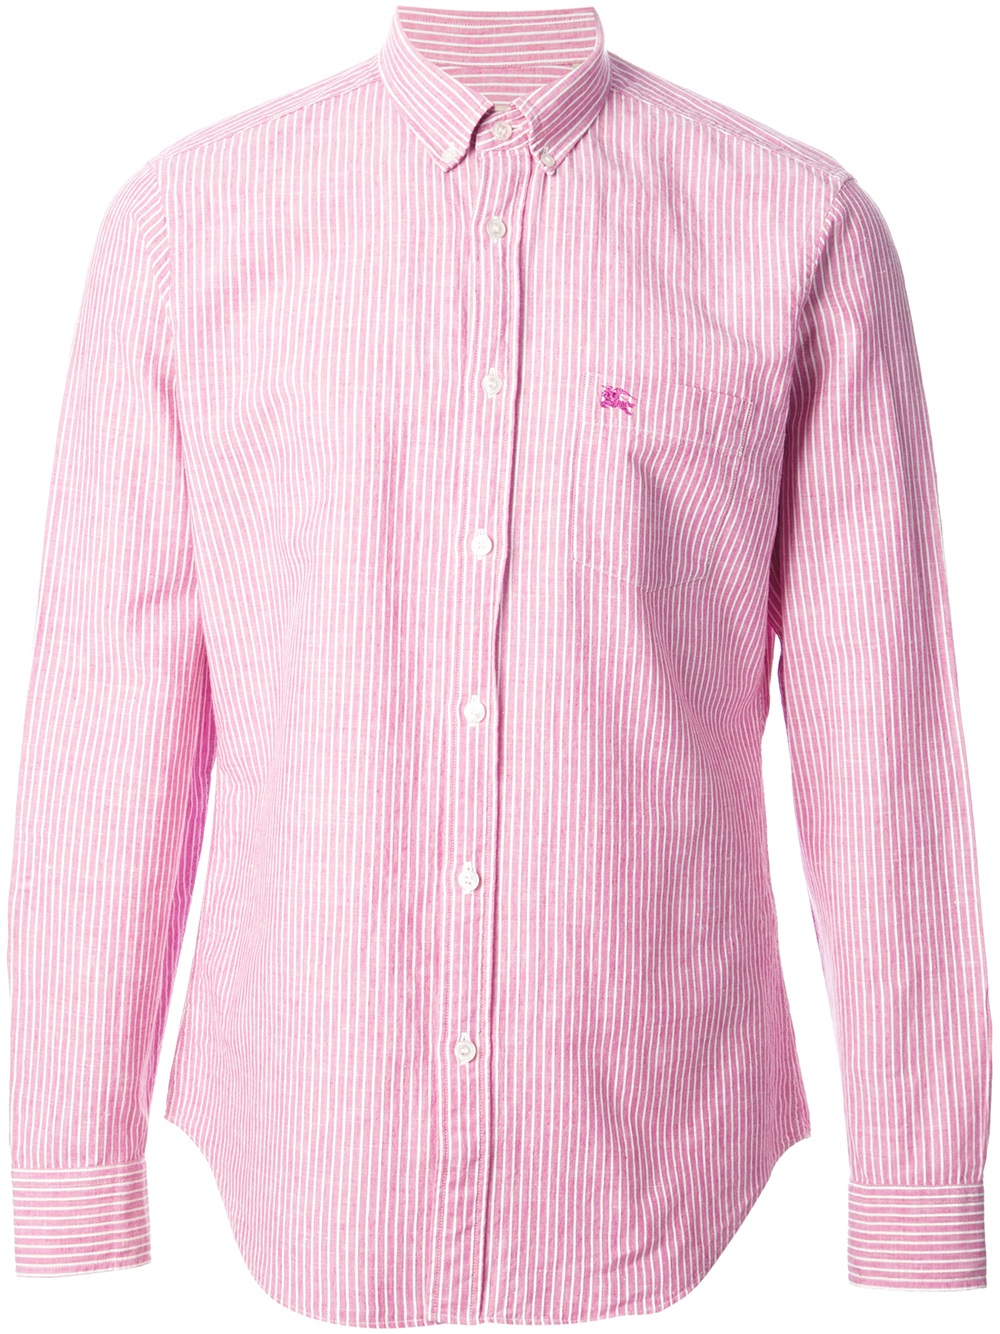 mens pink burberry shirt